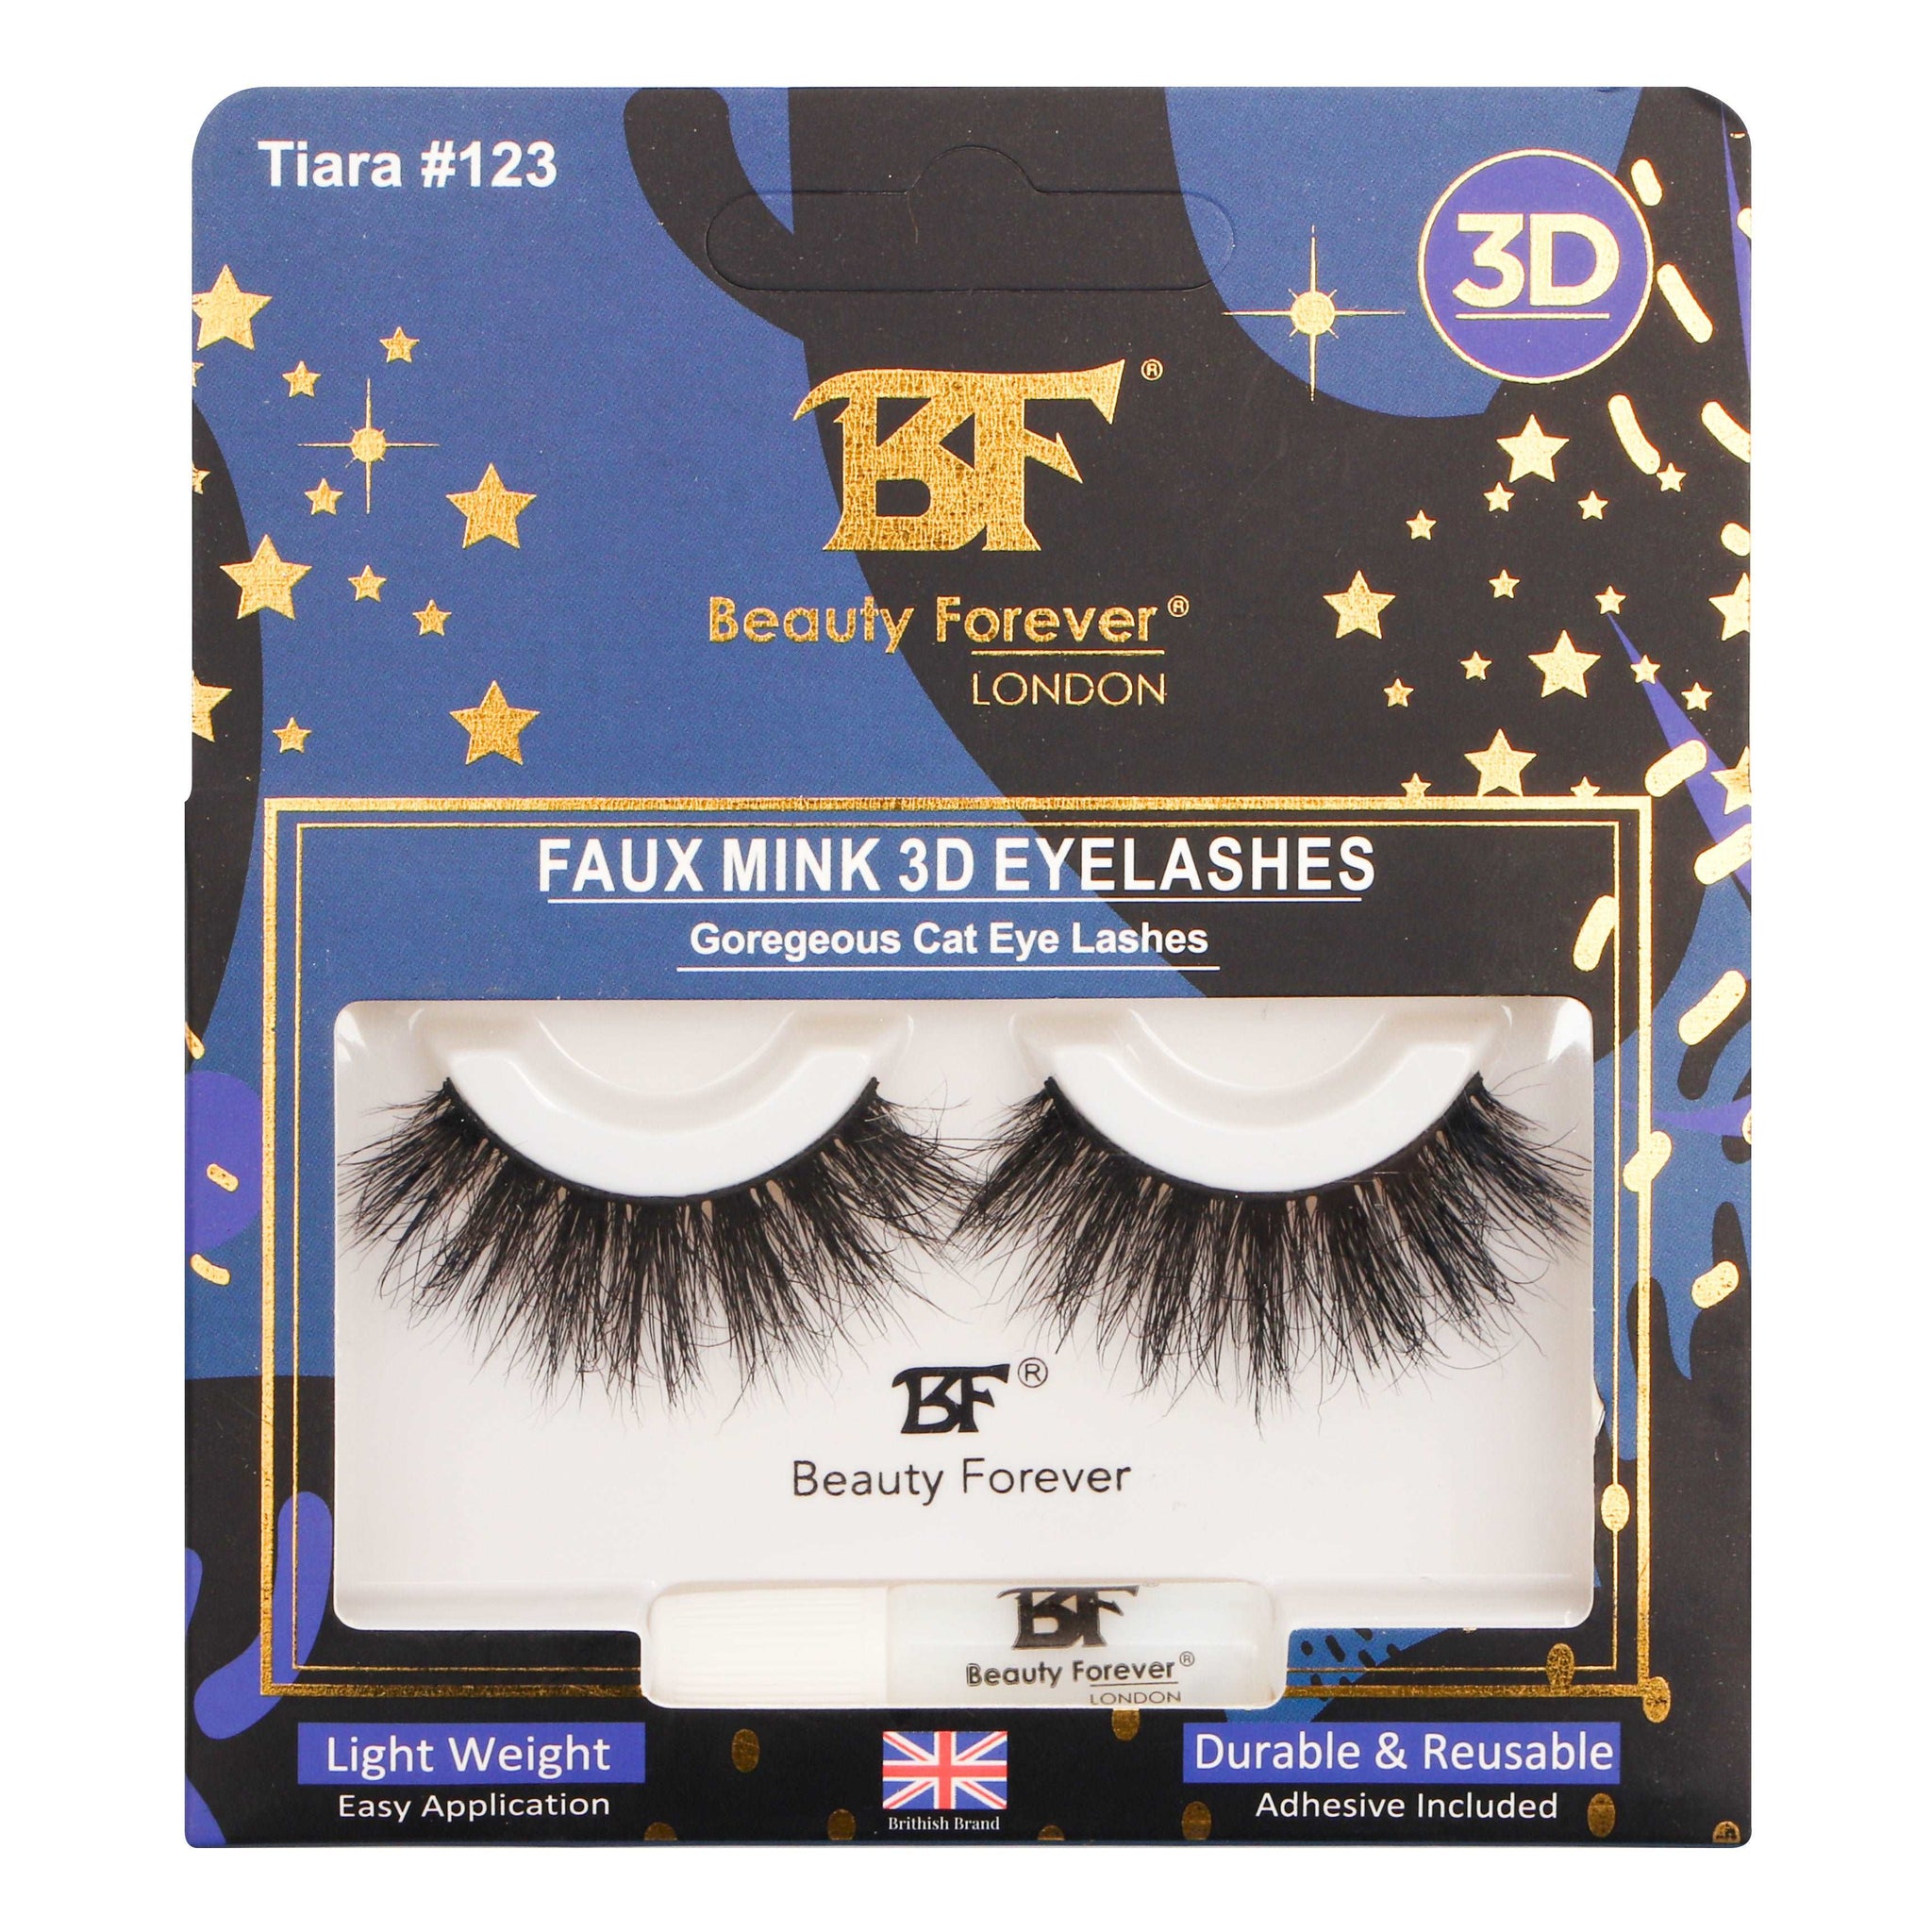 Beauty Forever Faux Mink 3D False Eyelashes in Tira #123